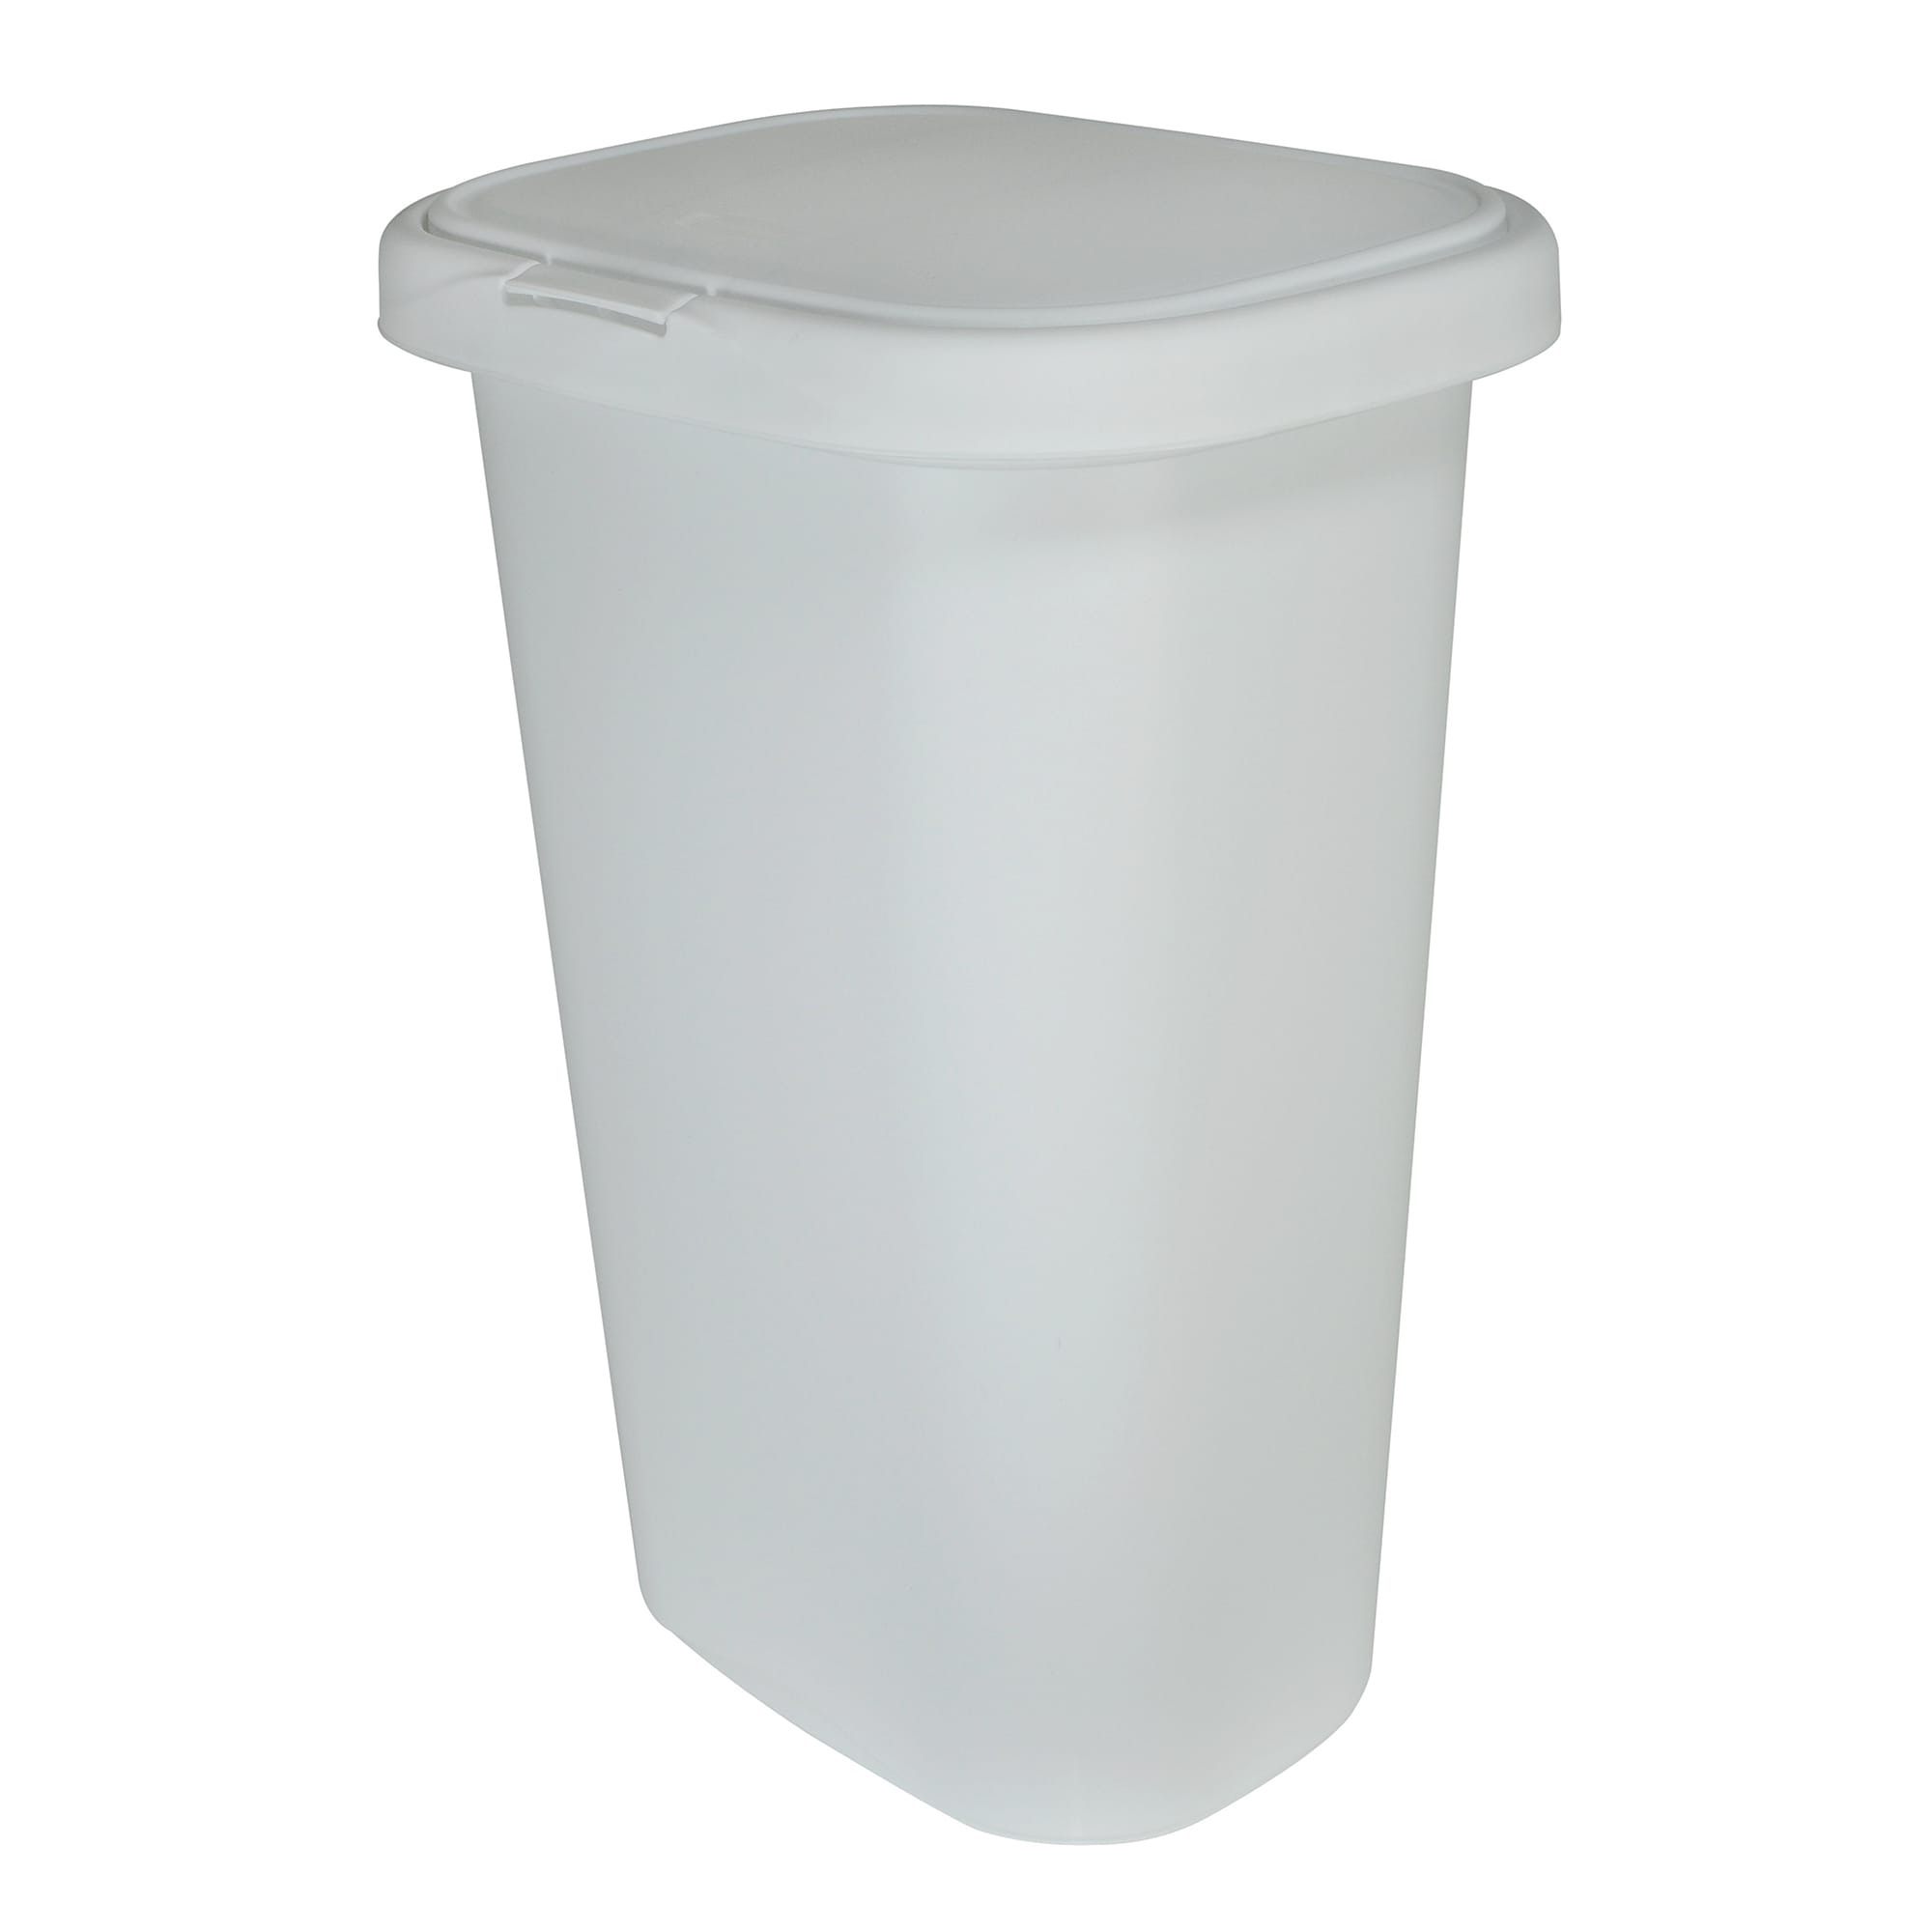 Rubbermaid Home 1843028 Trash Can, 13 Gallon Capacity, Black: Waste Baskets  (071691467083-1)